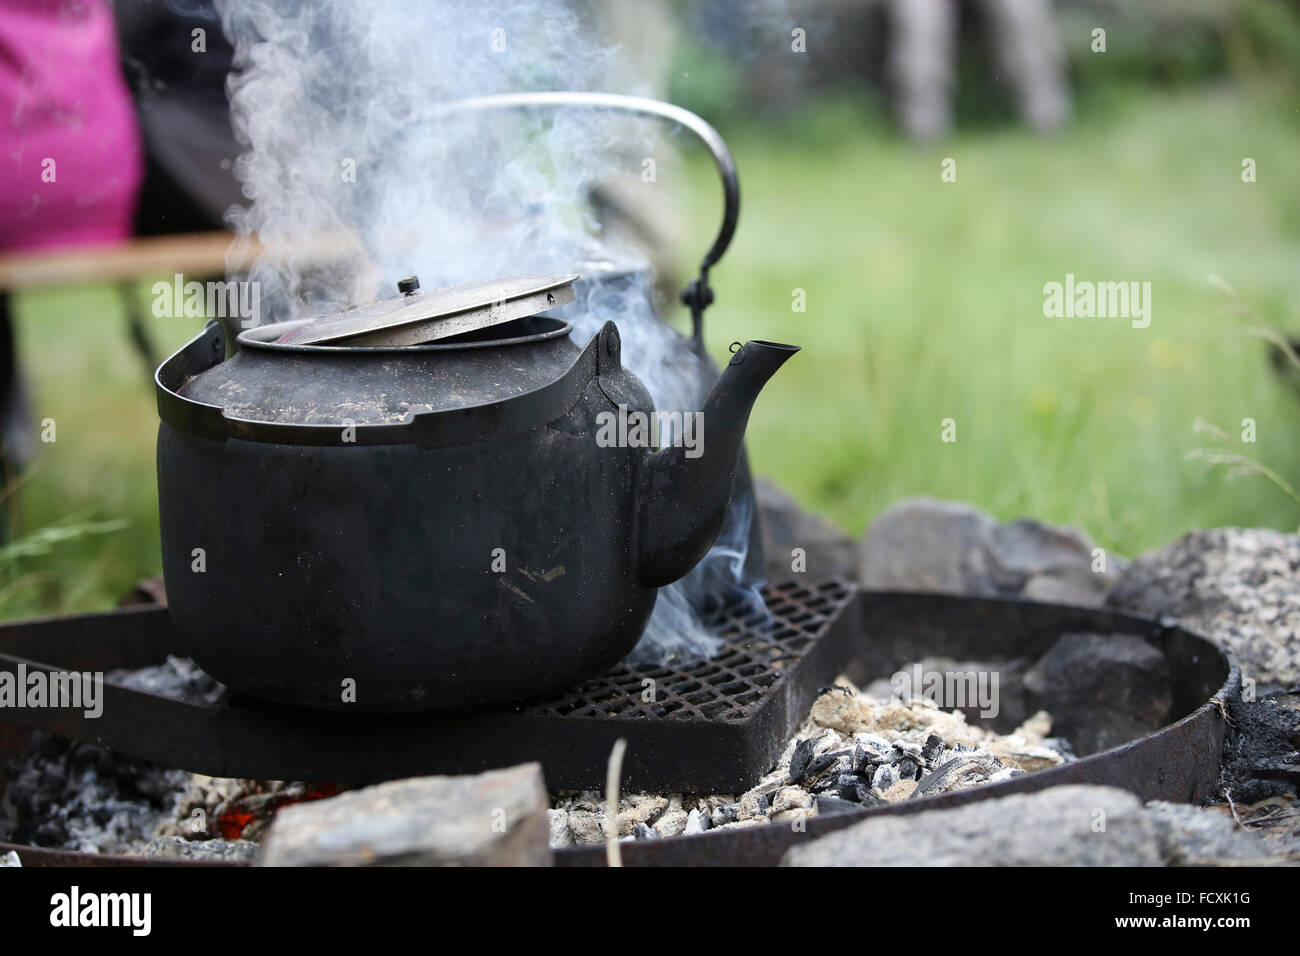 Norway, Nordland, Narvik. Detail shot of boiling kettle. Stock Photo